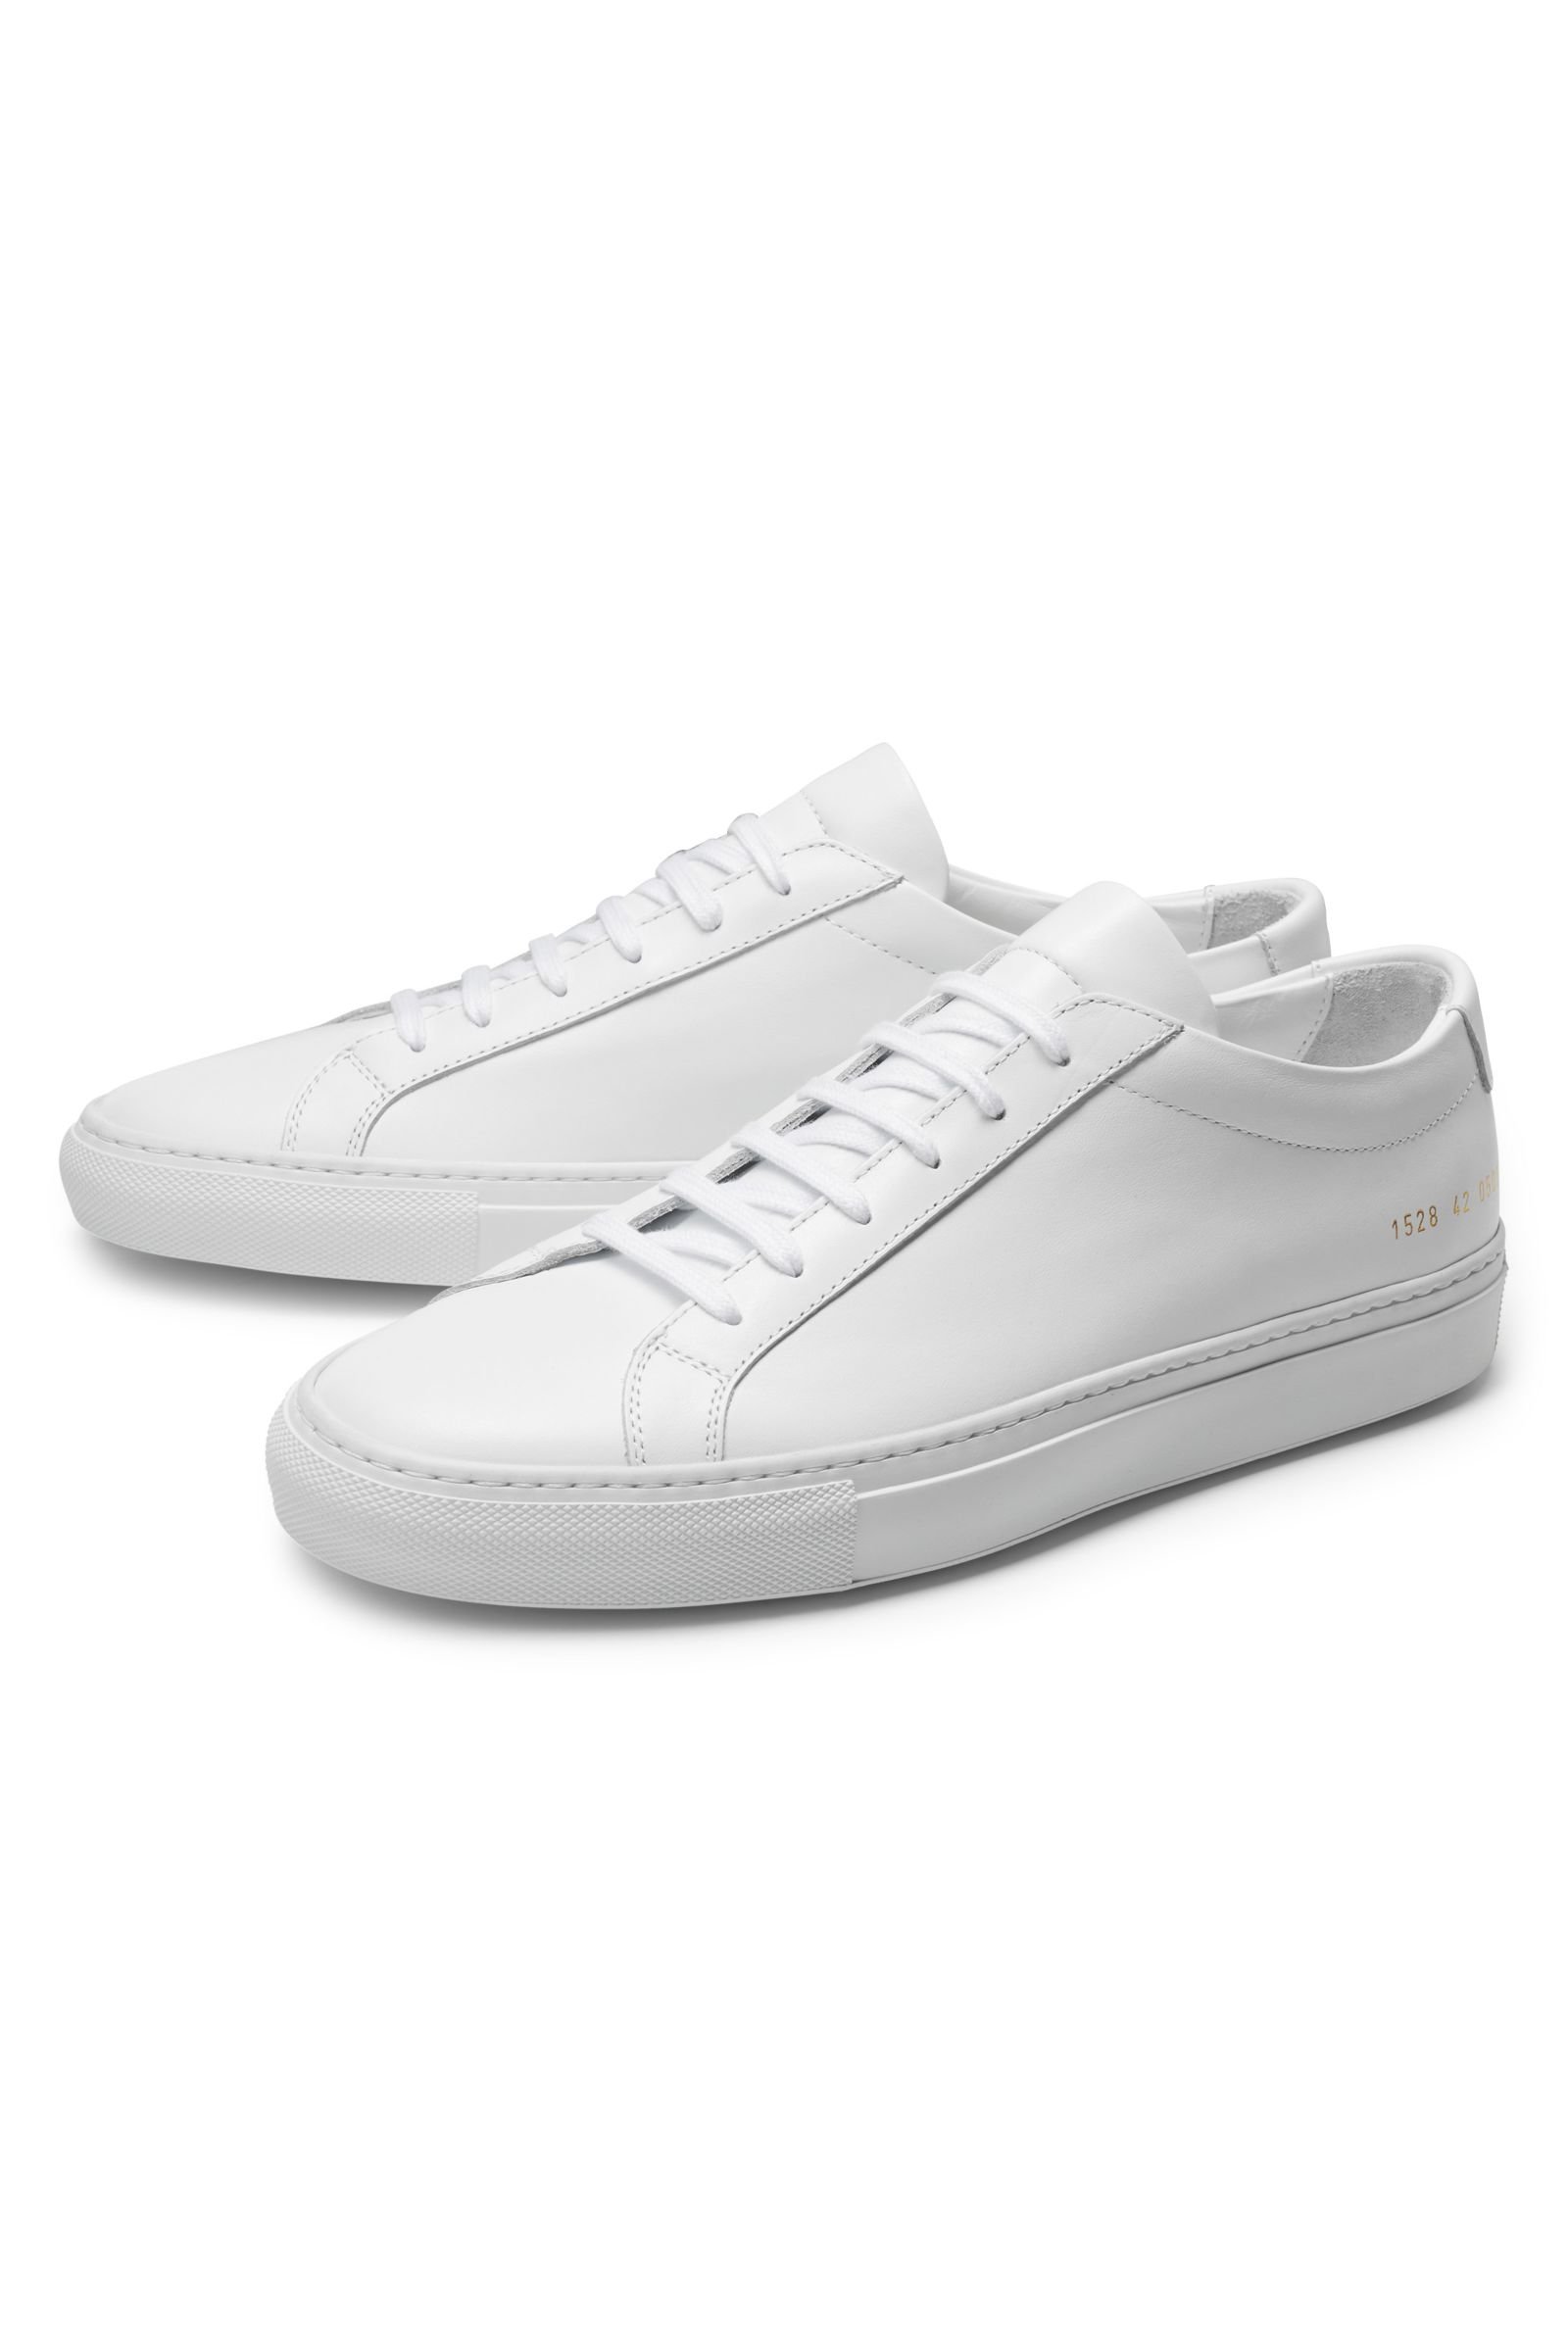 ‘Original Achilles`sneakers in white